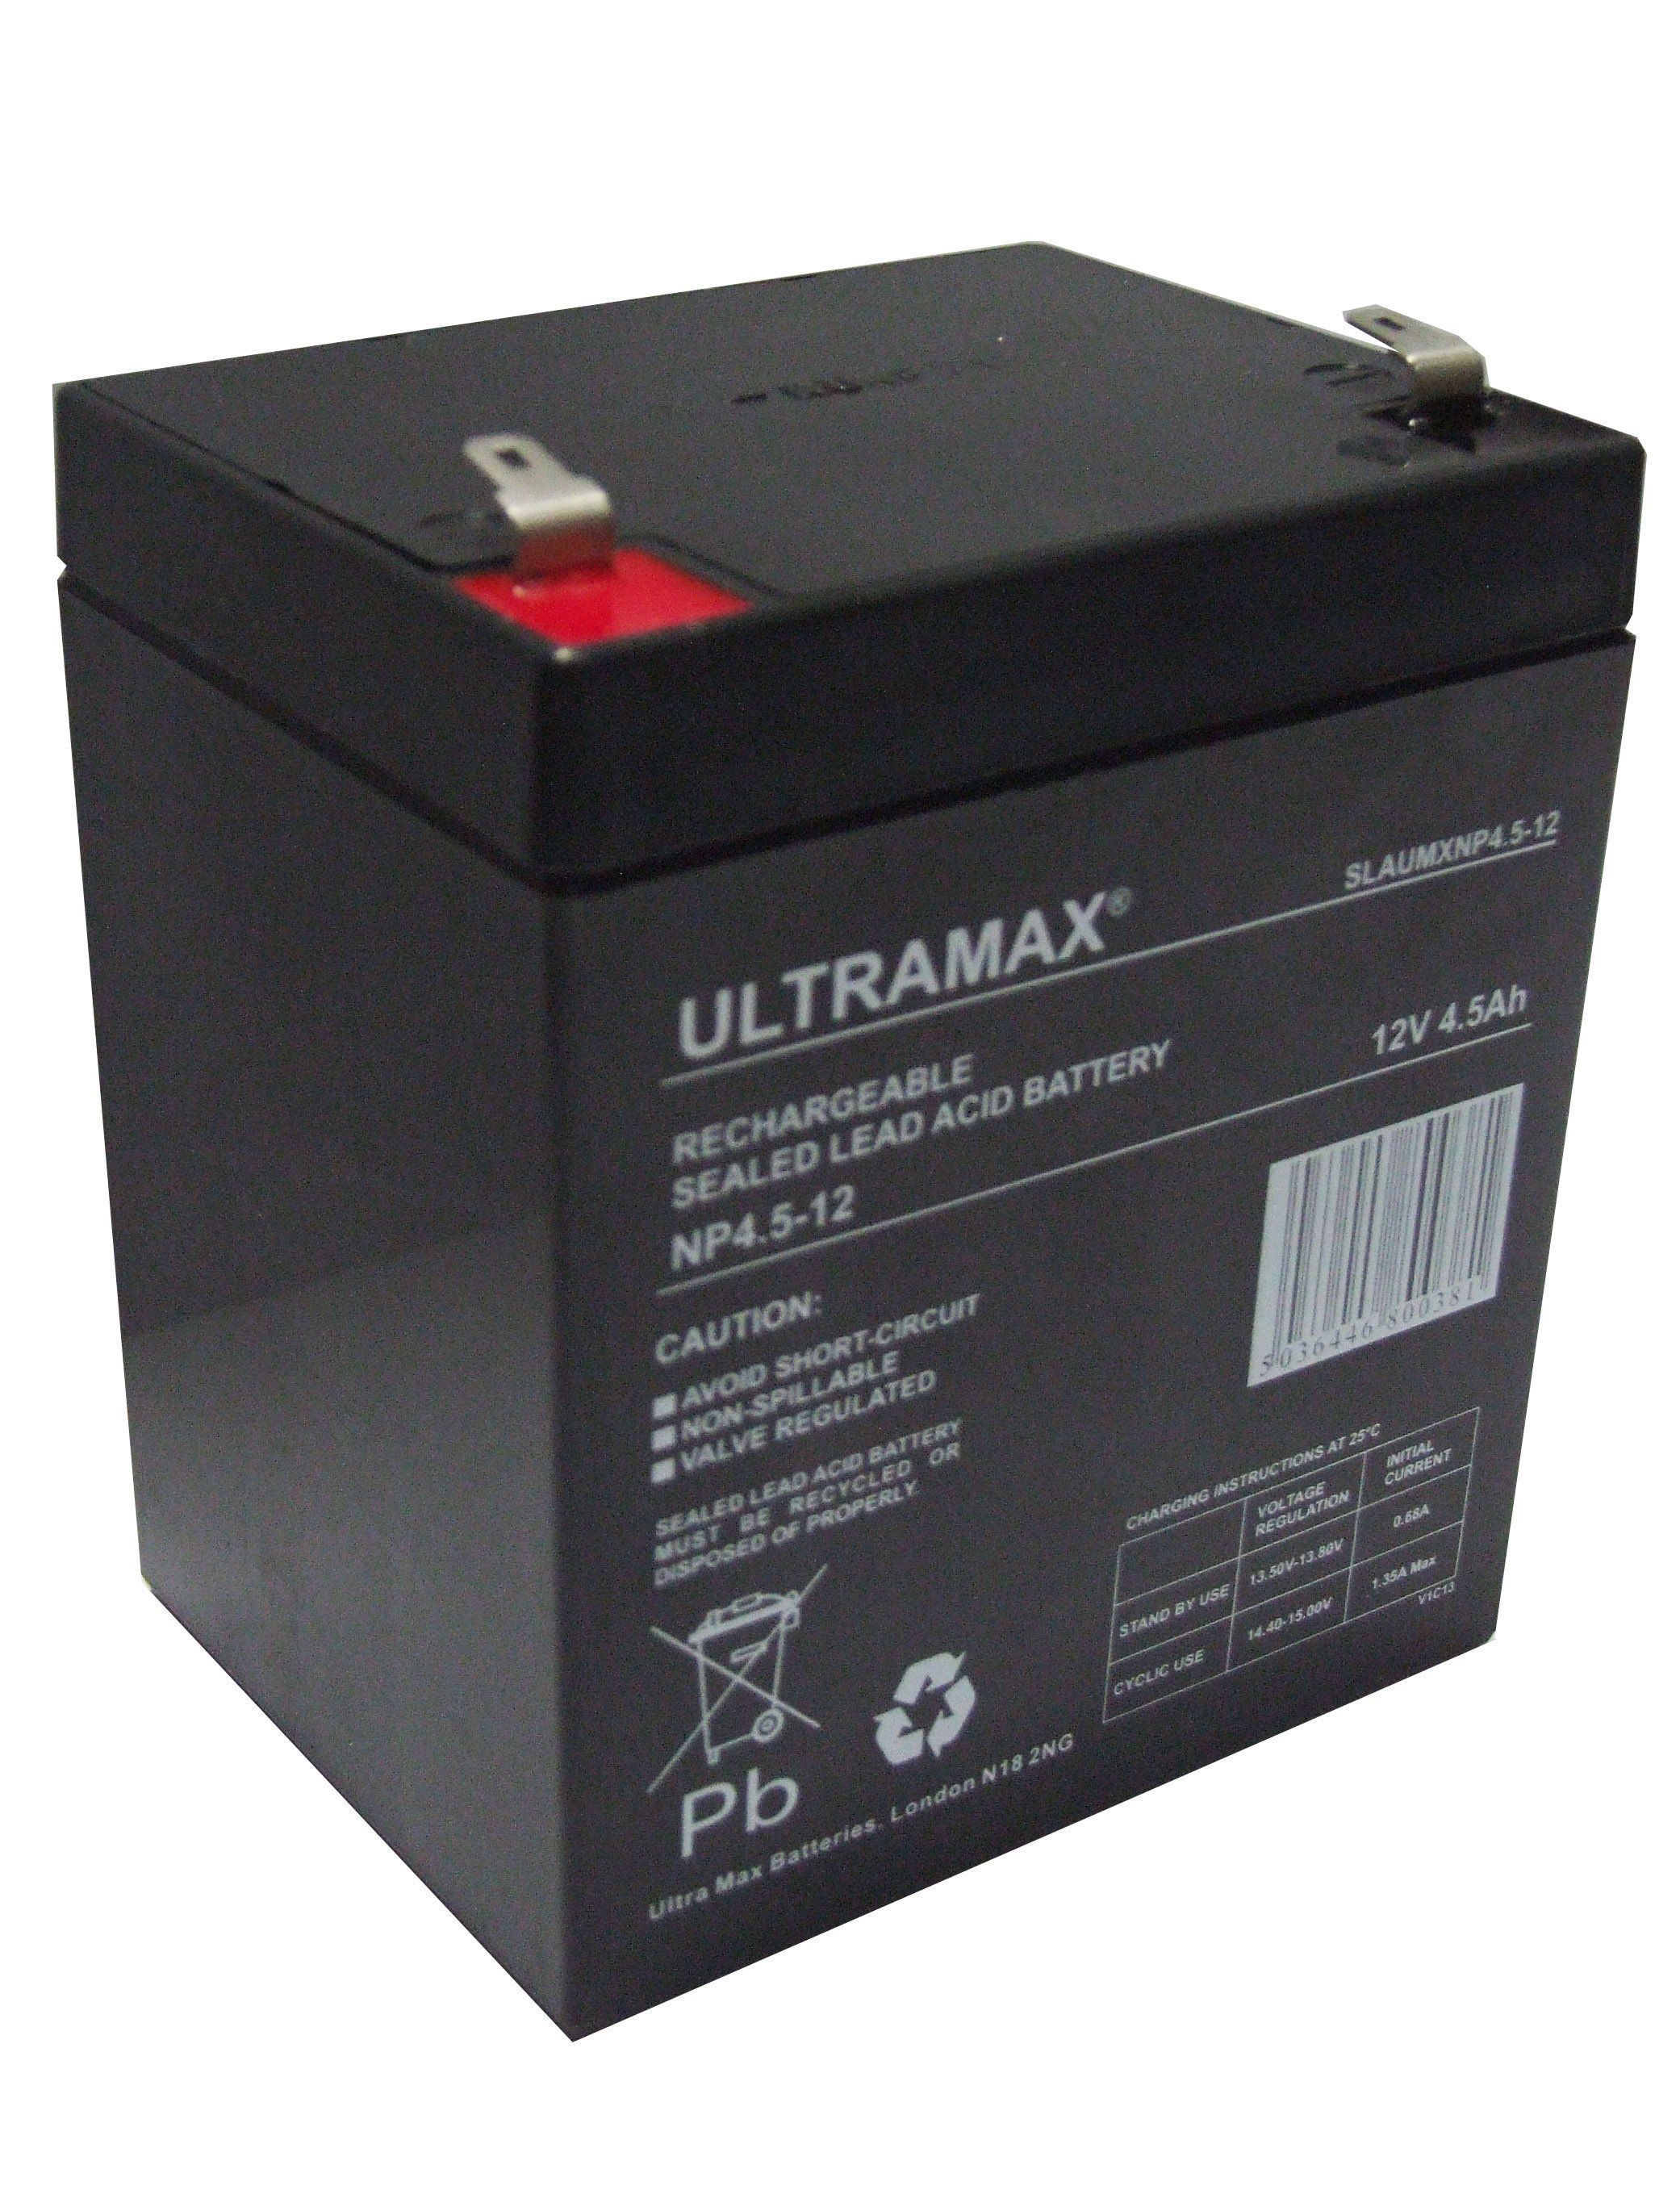 Acme RB12V4 12V 4.5Ah Alarm Replacement Ultramax NP4.5-12 Battery